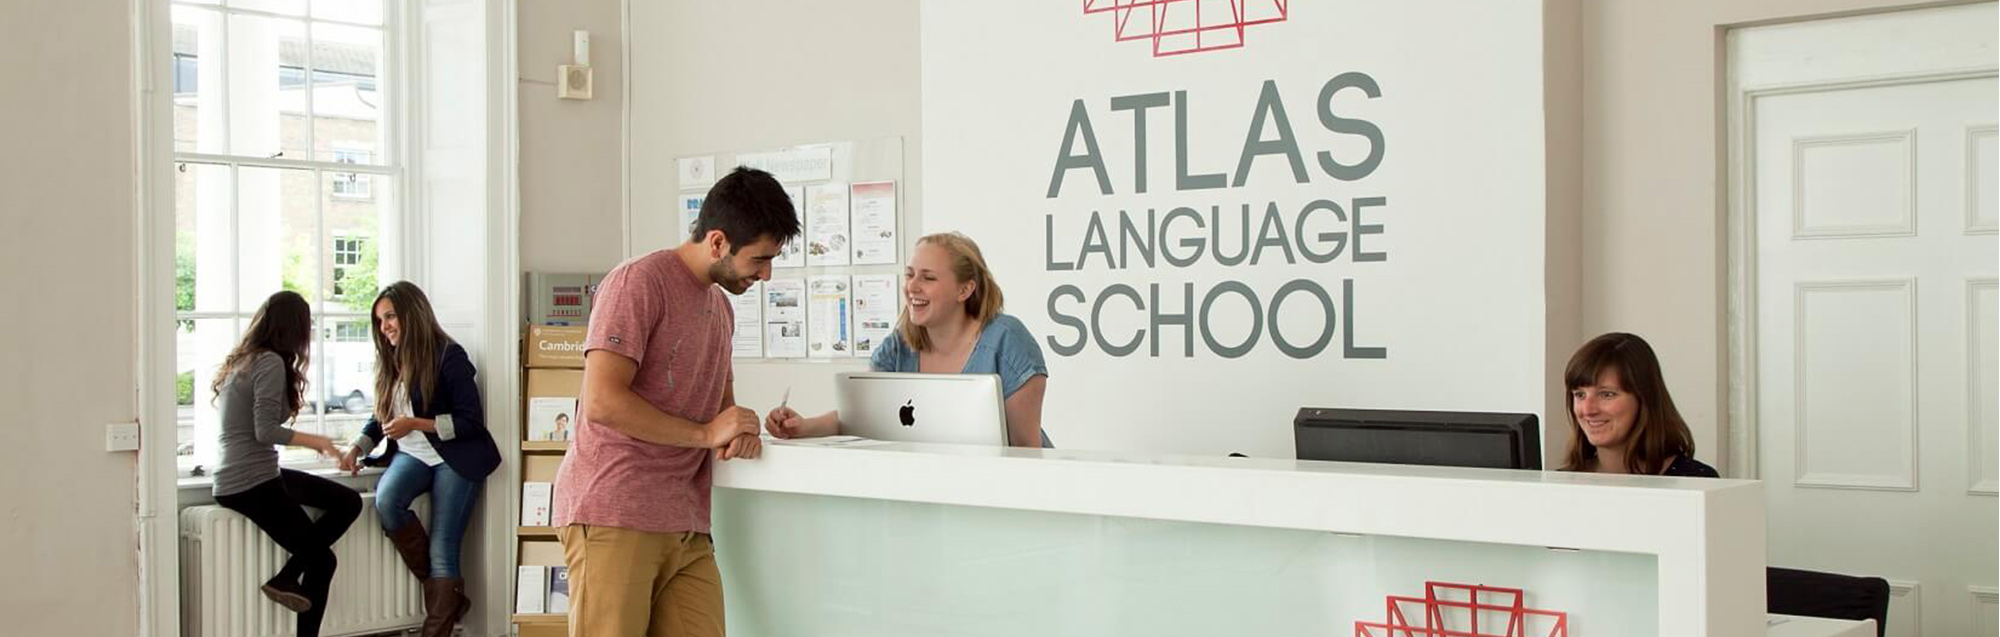 Sprachkurse & Preise von Atlas Language School